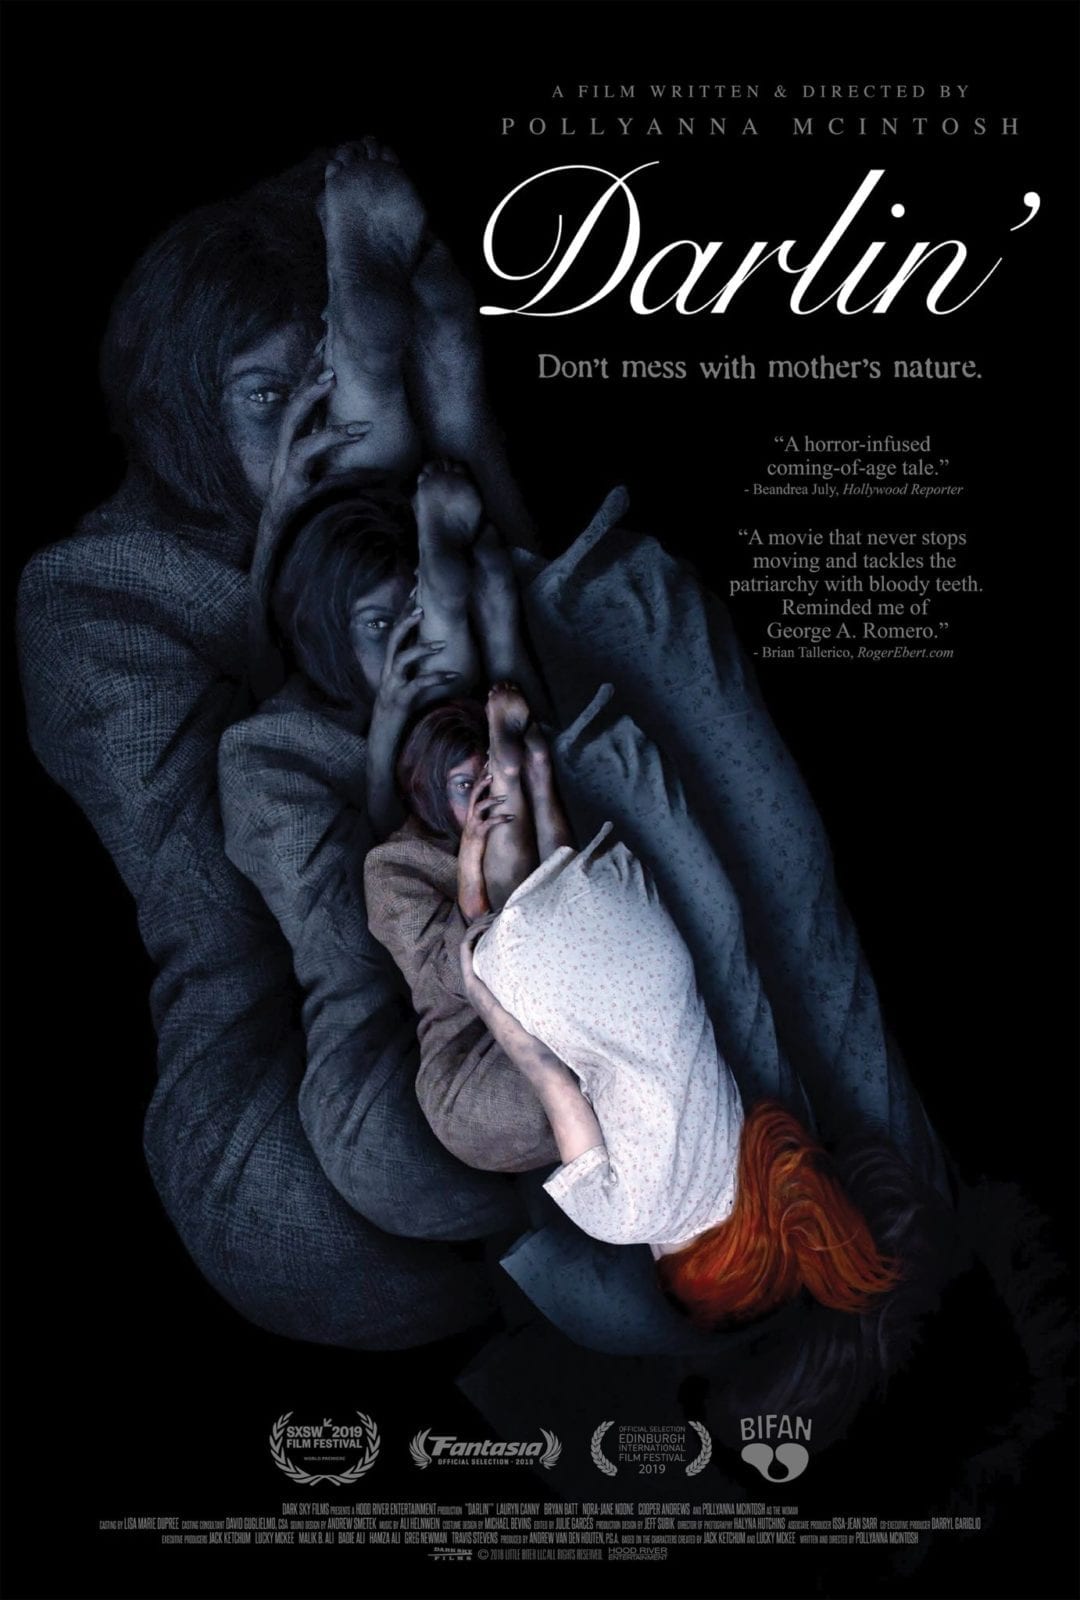 Darlin' movie poster starring Pollyanna McIntosh